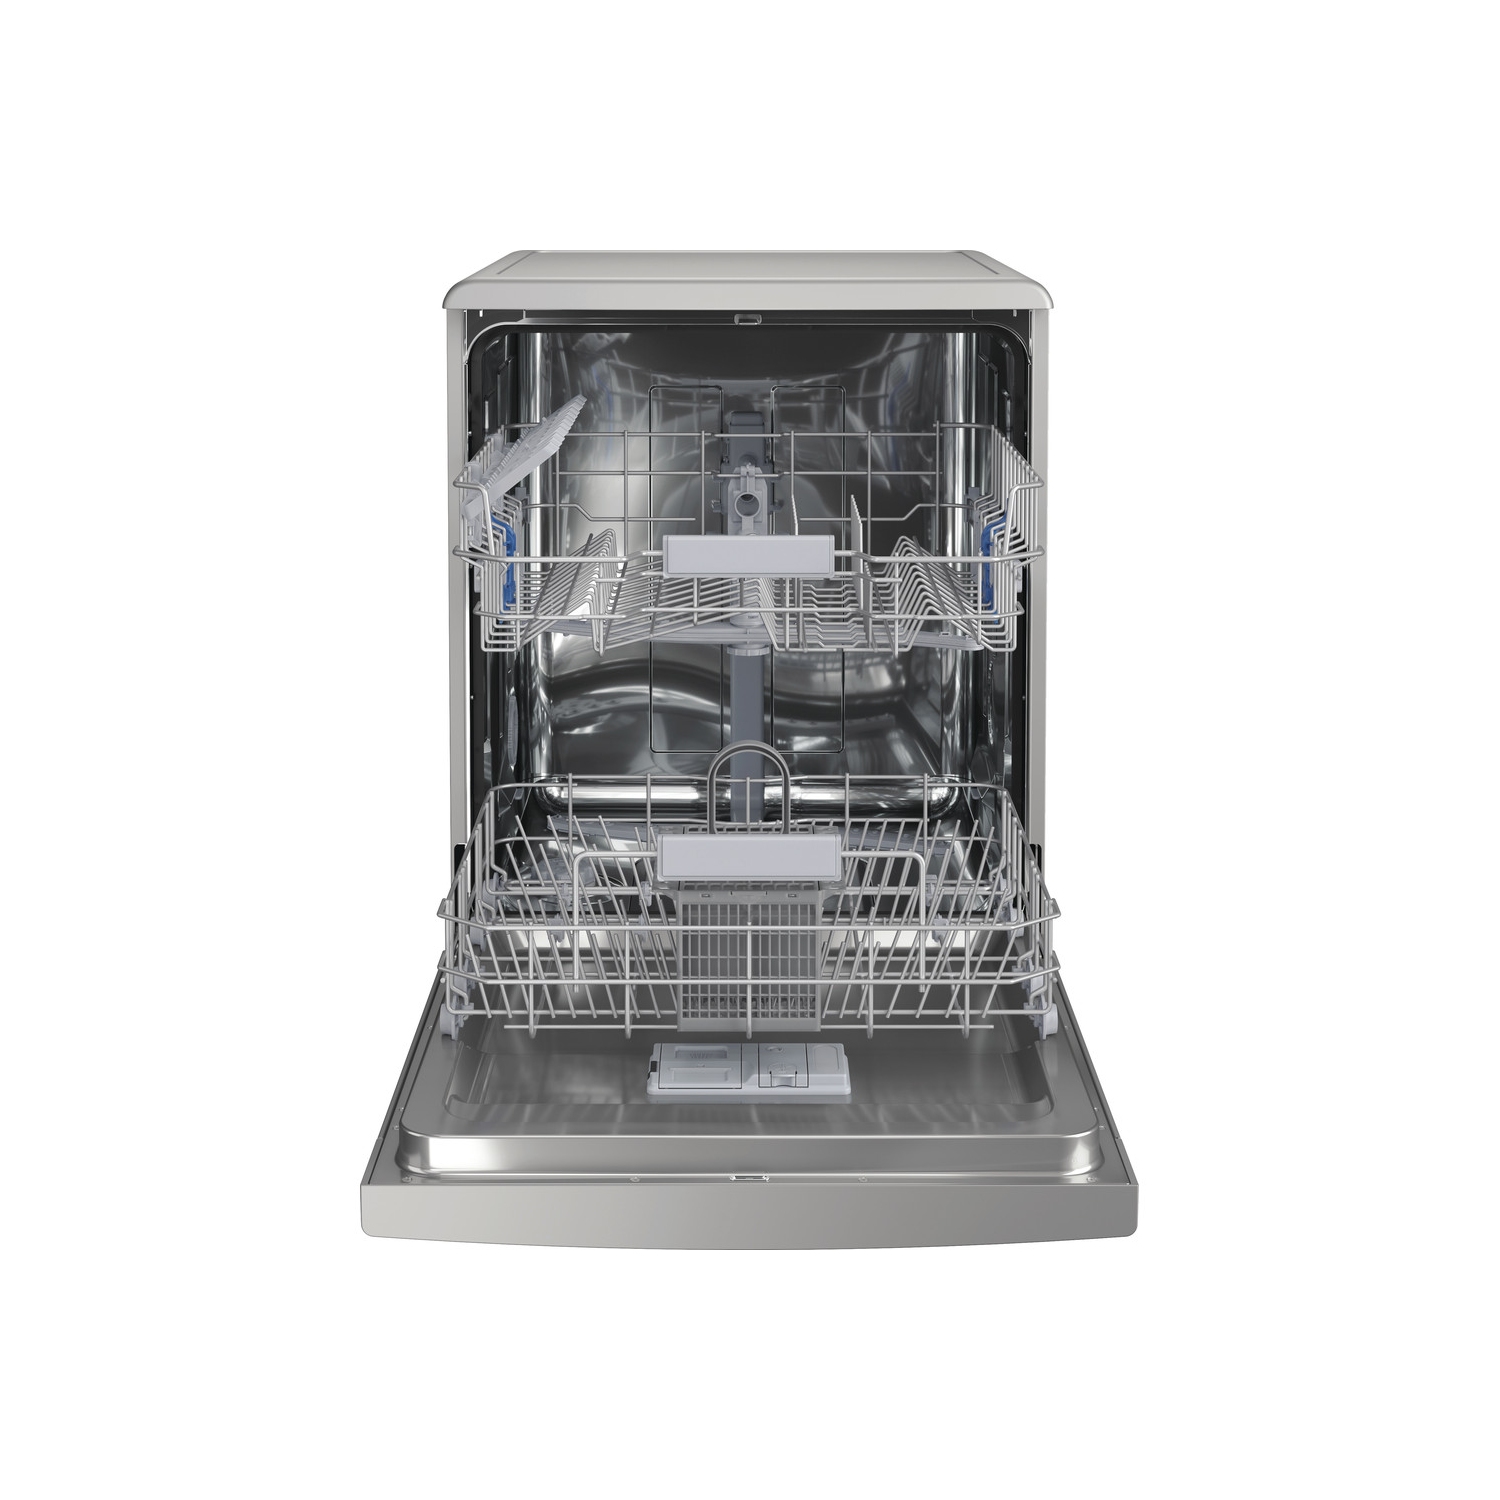 Indesit DFC2B16SUK Full Size Dishwasher - Silver - 13 Place Settings - 3